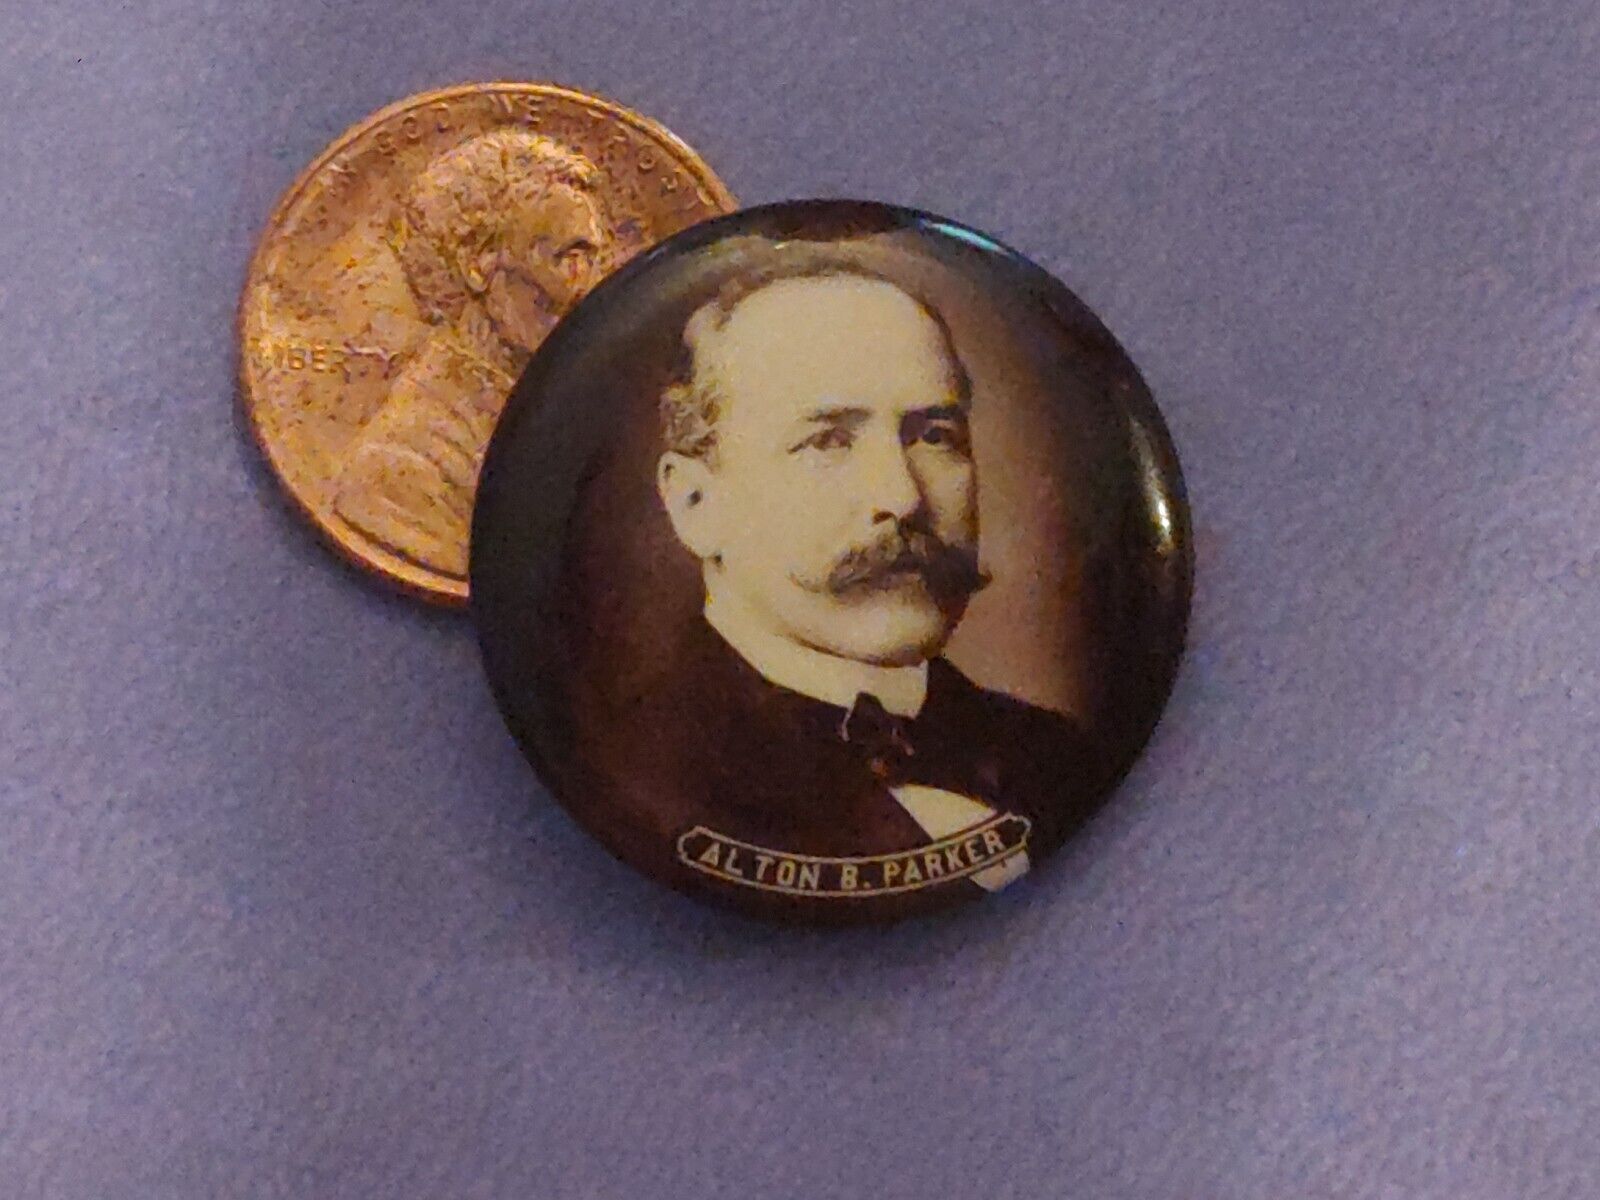 1904 Alton B. Parker Campaign Button 1” Cello President Pin Tab Nice